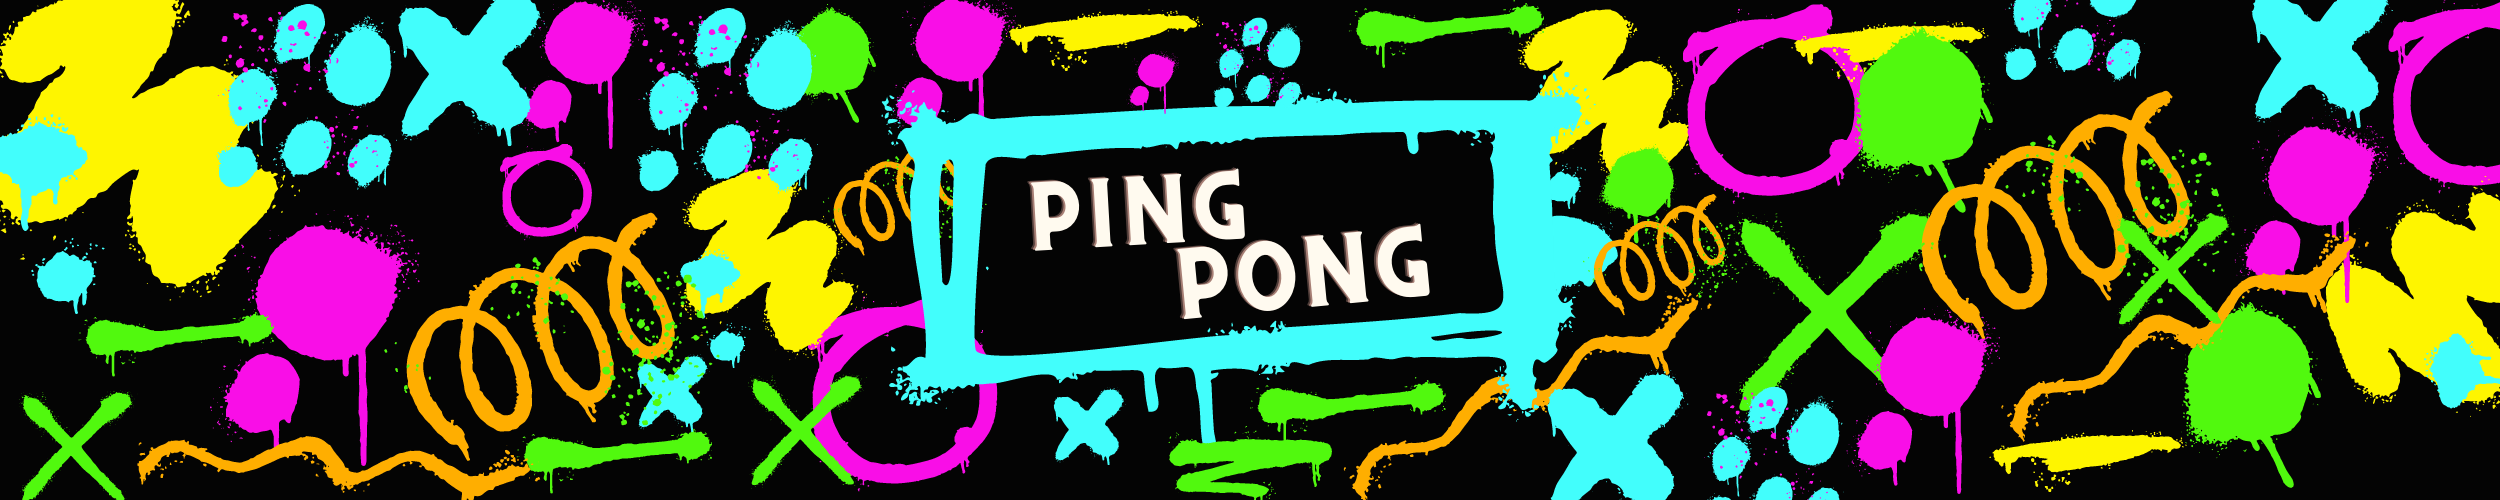 ping longer